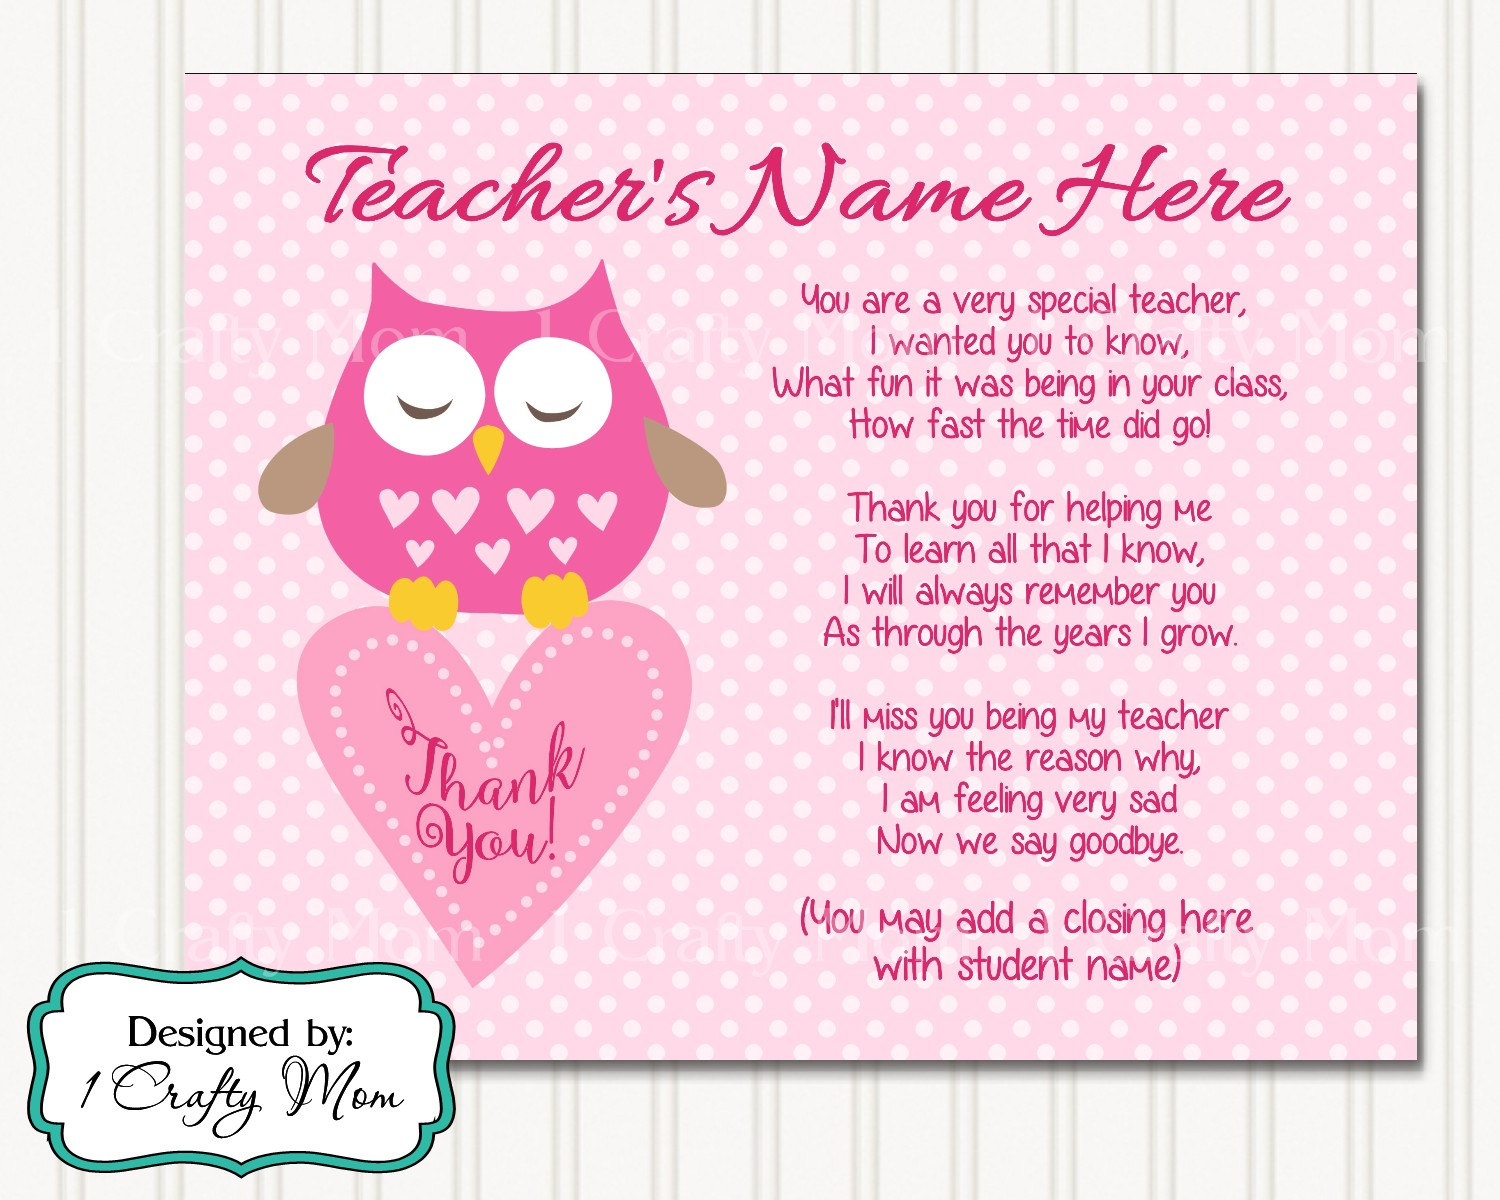 Thank you teacher poem. Poems for teachers. What is a teacher? Poem. Thank you poem to the teacher with name. Teacher poem